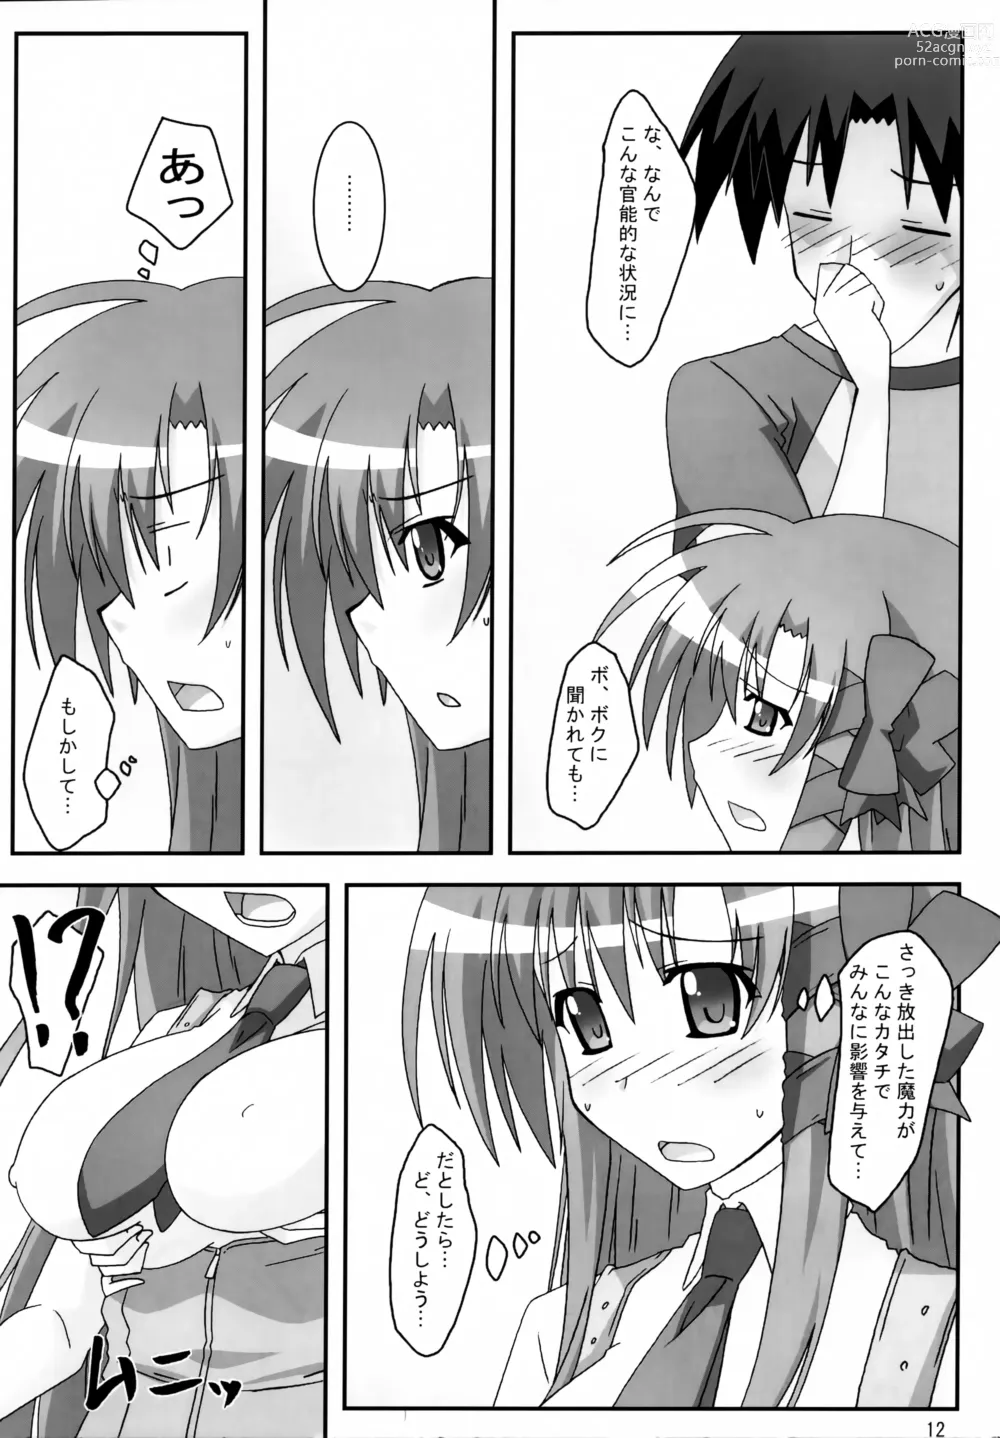 Page 11 of doujinshi SHUFFLE! With